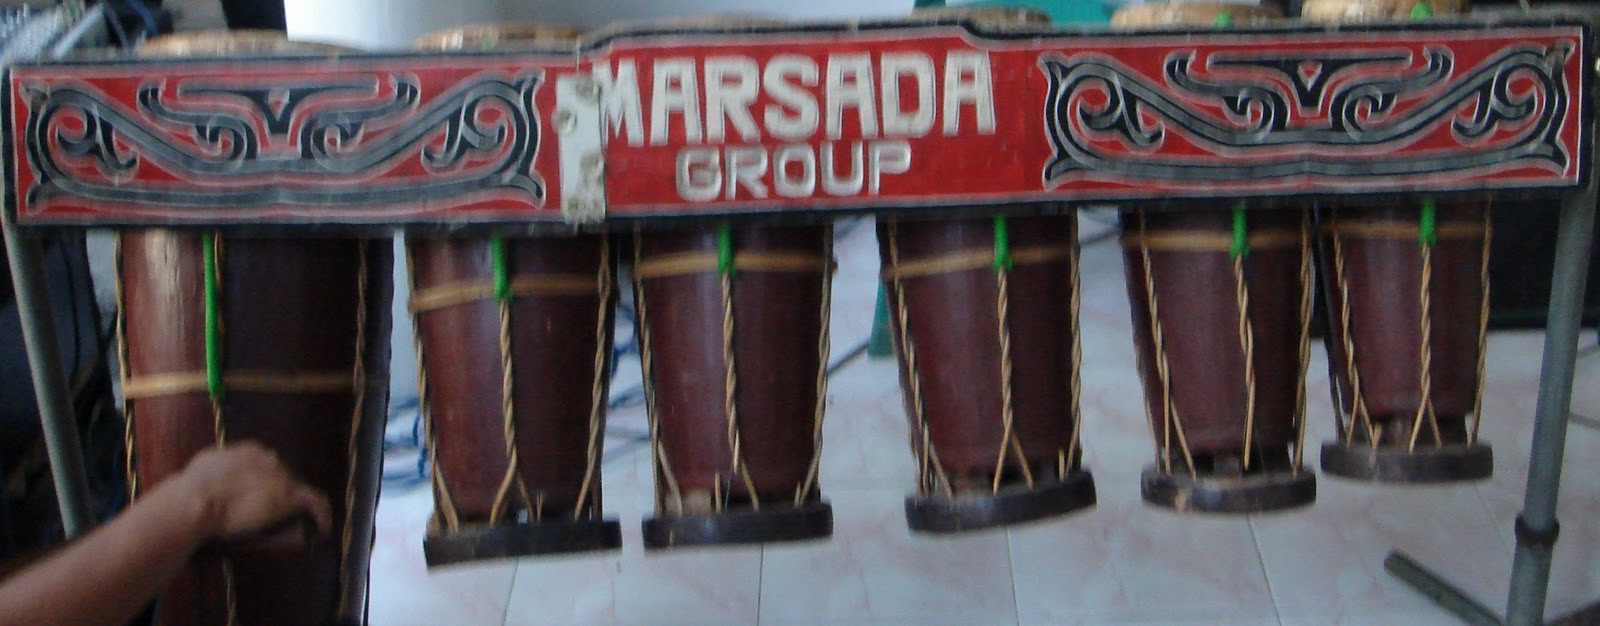 MARSADA GROUP MUSIK  ENTERTAINMENT Musik  Batak